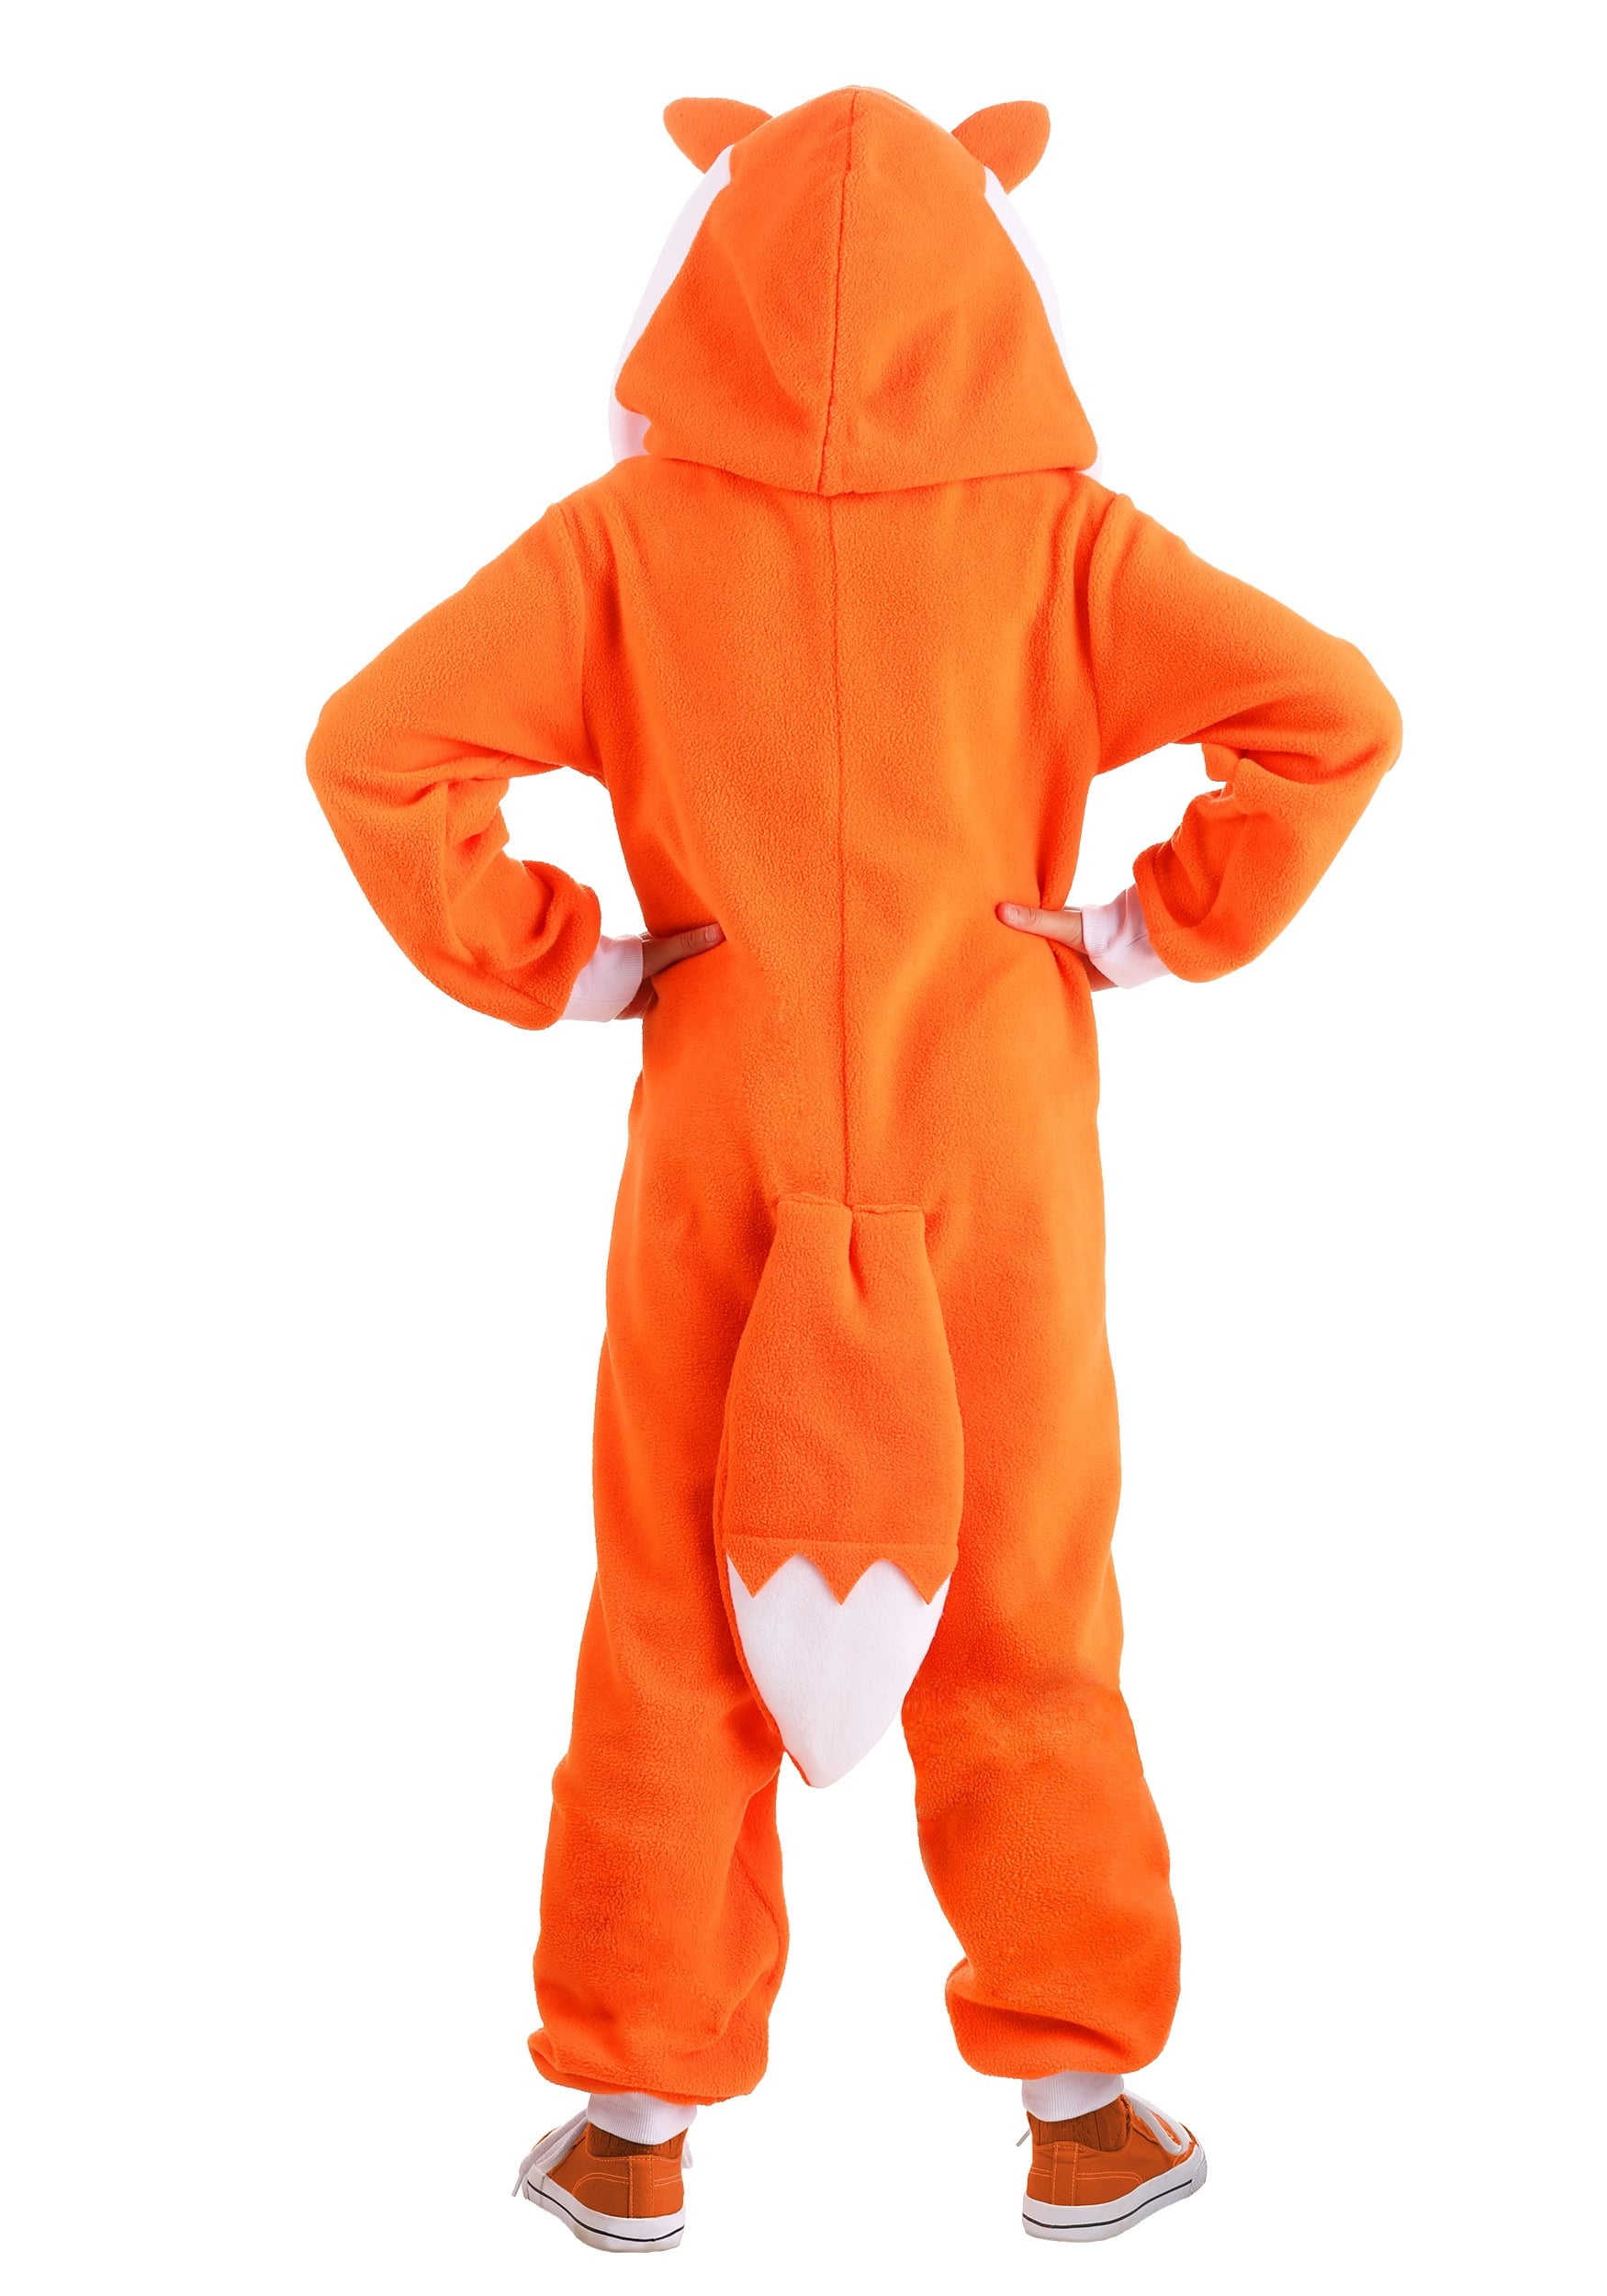 Foxy Fox Dress size S Girls Plush Costume Orange Carnival Dress-Up Play CHOP